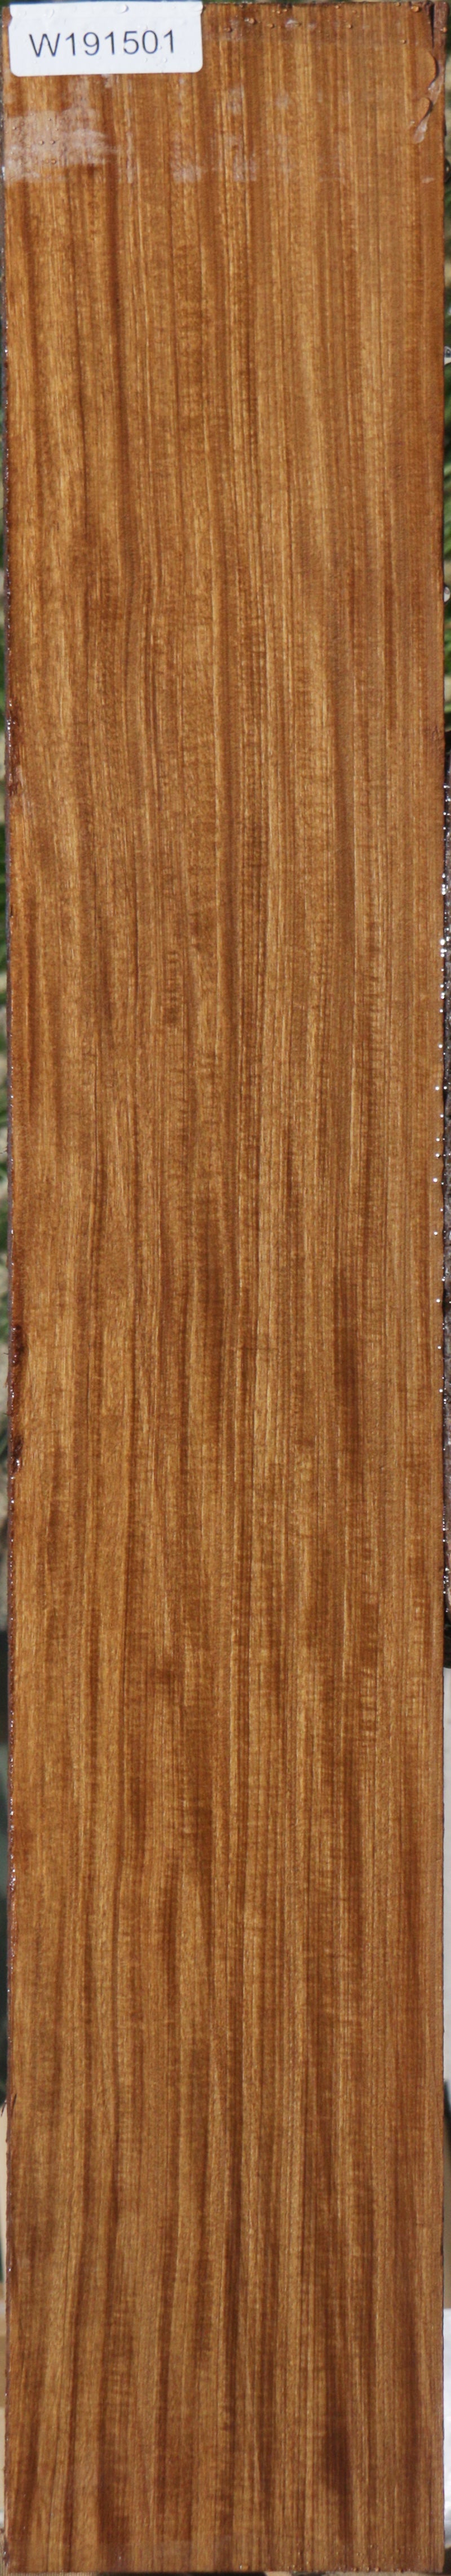 Afrormosia Lumber